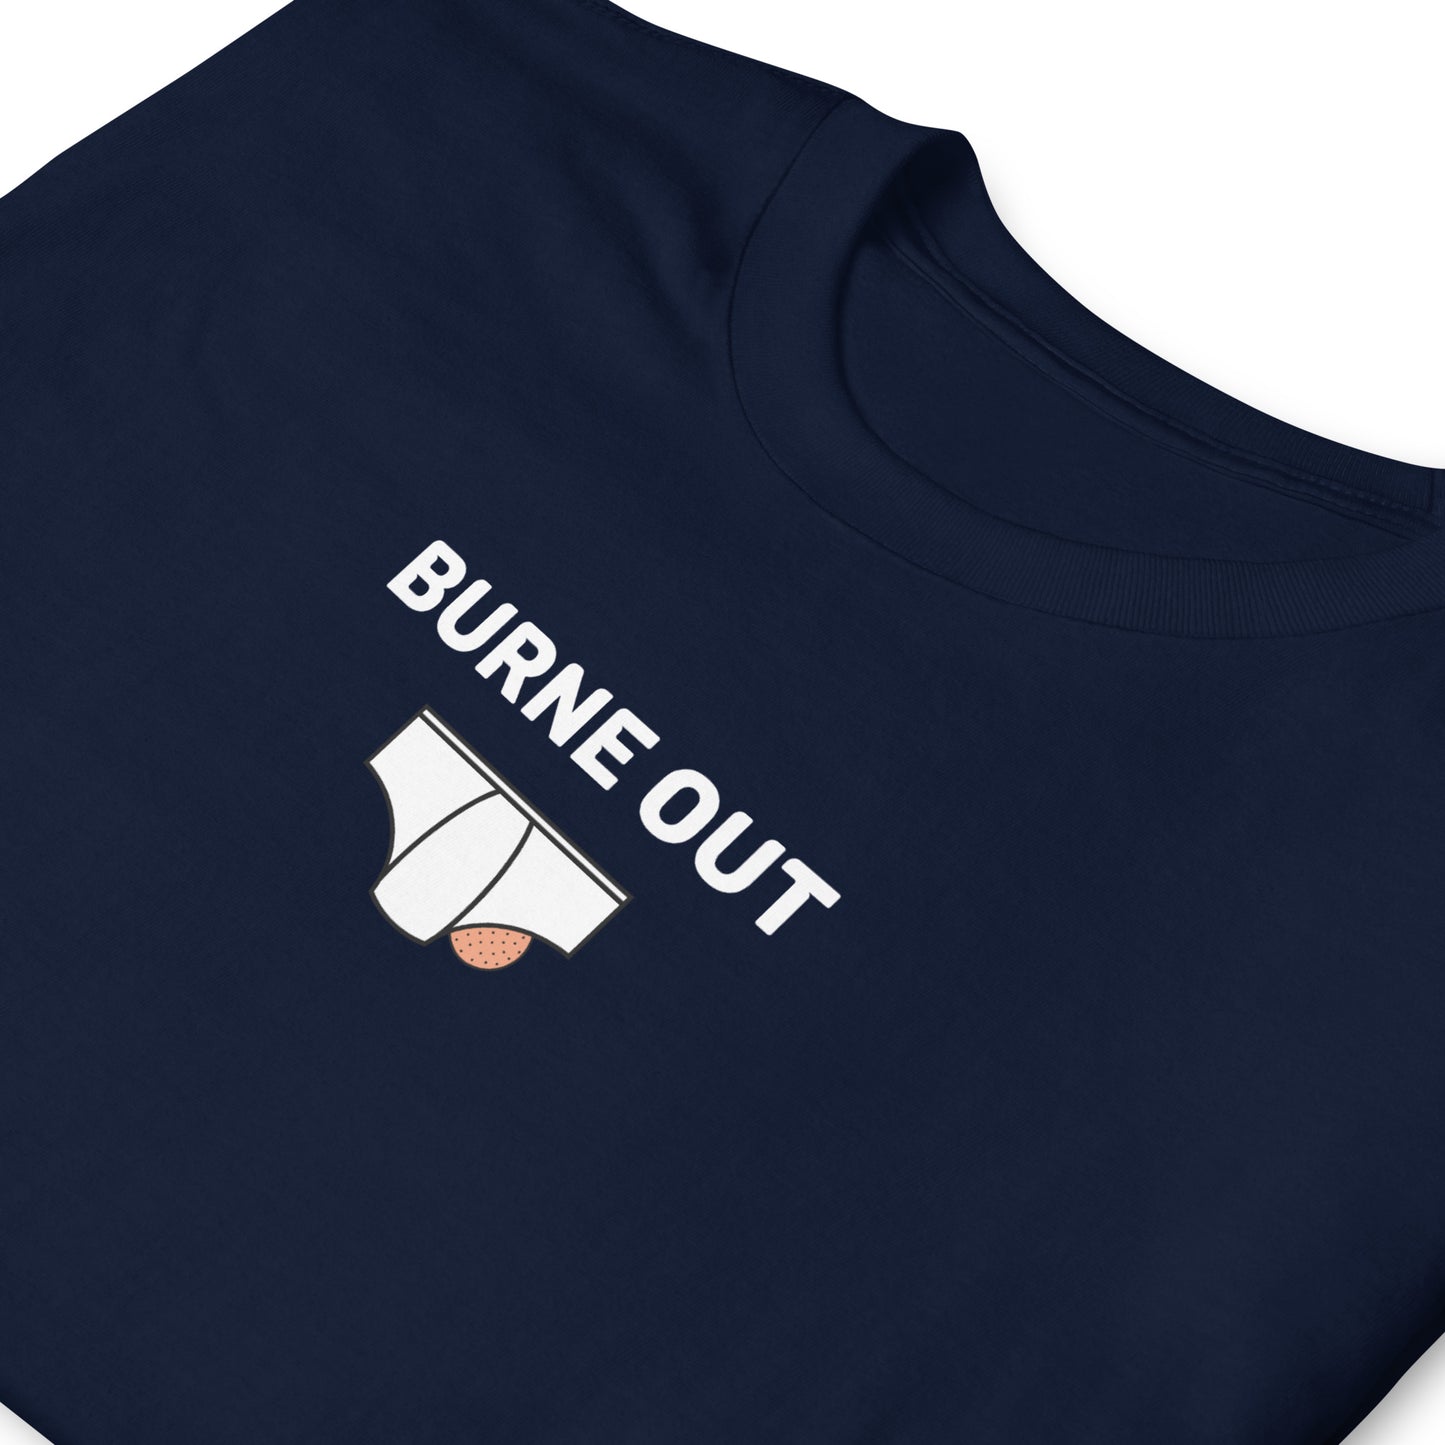 T-shirt unisexe Burne out